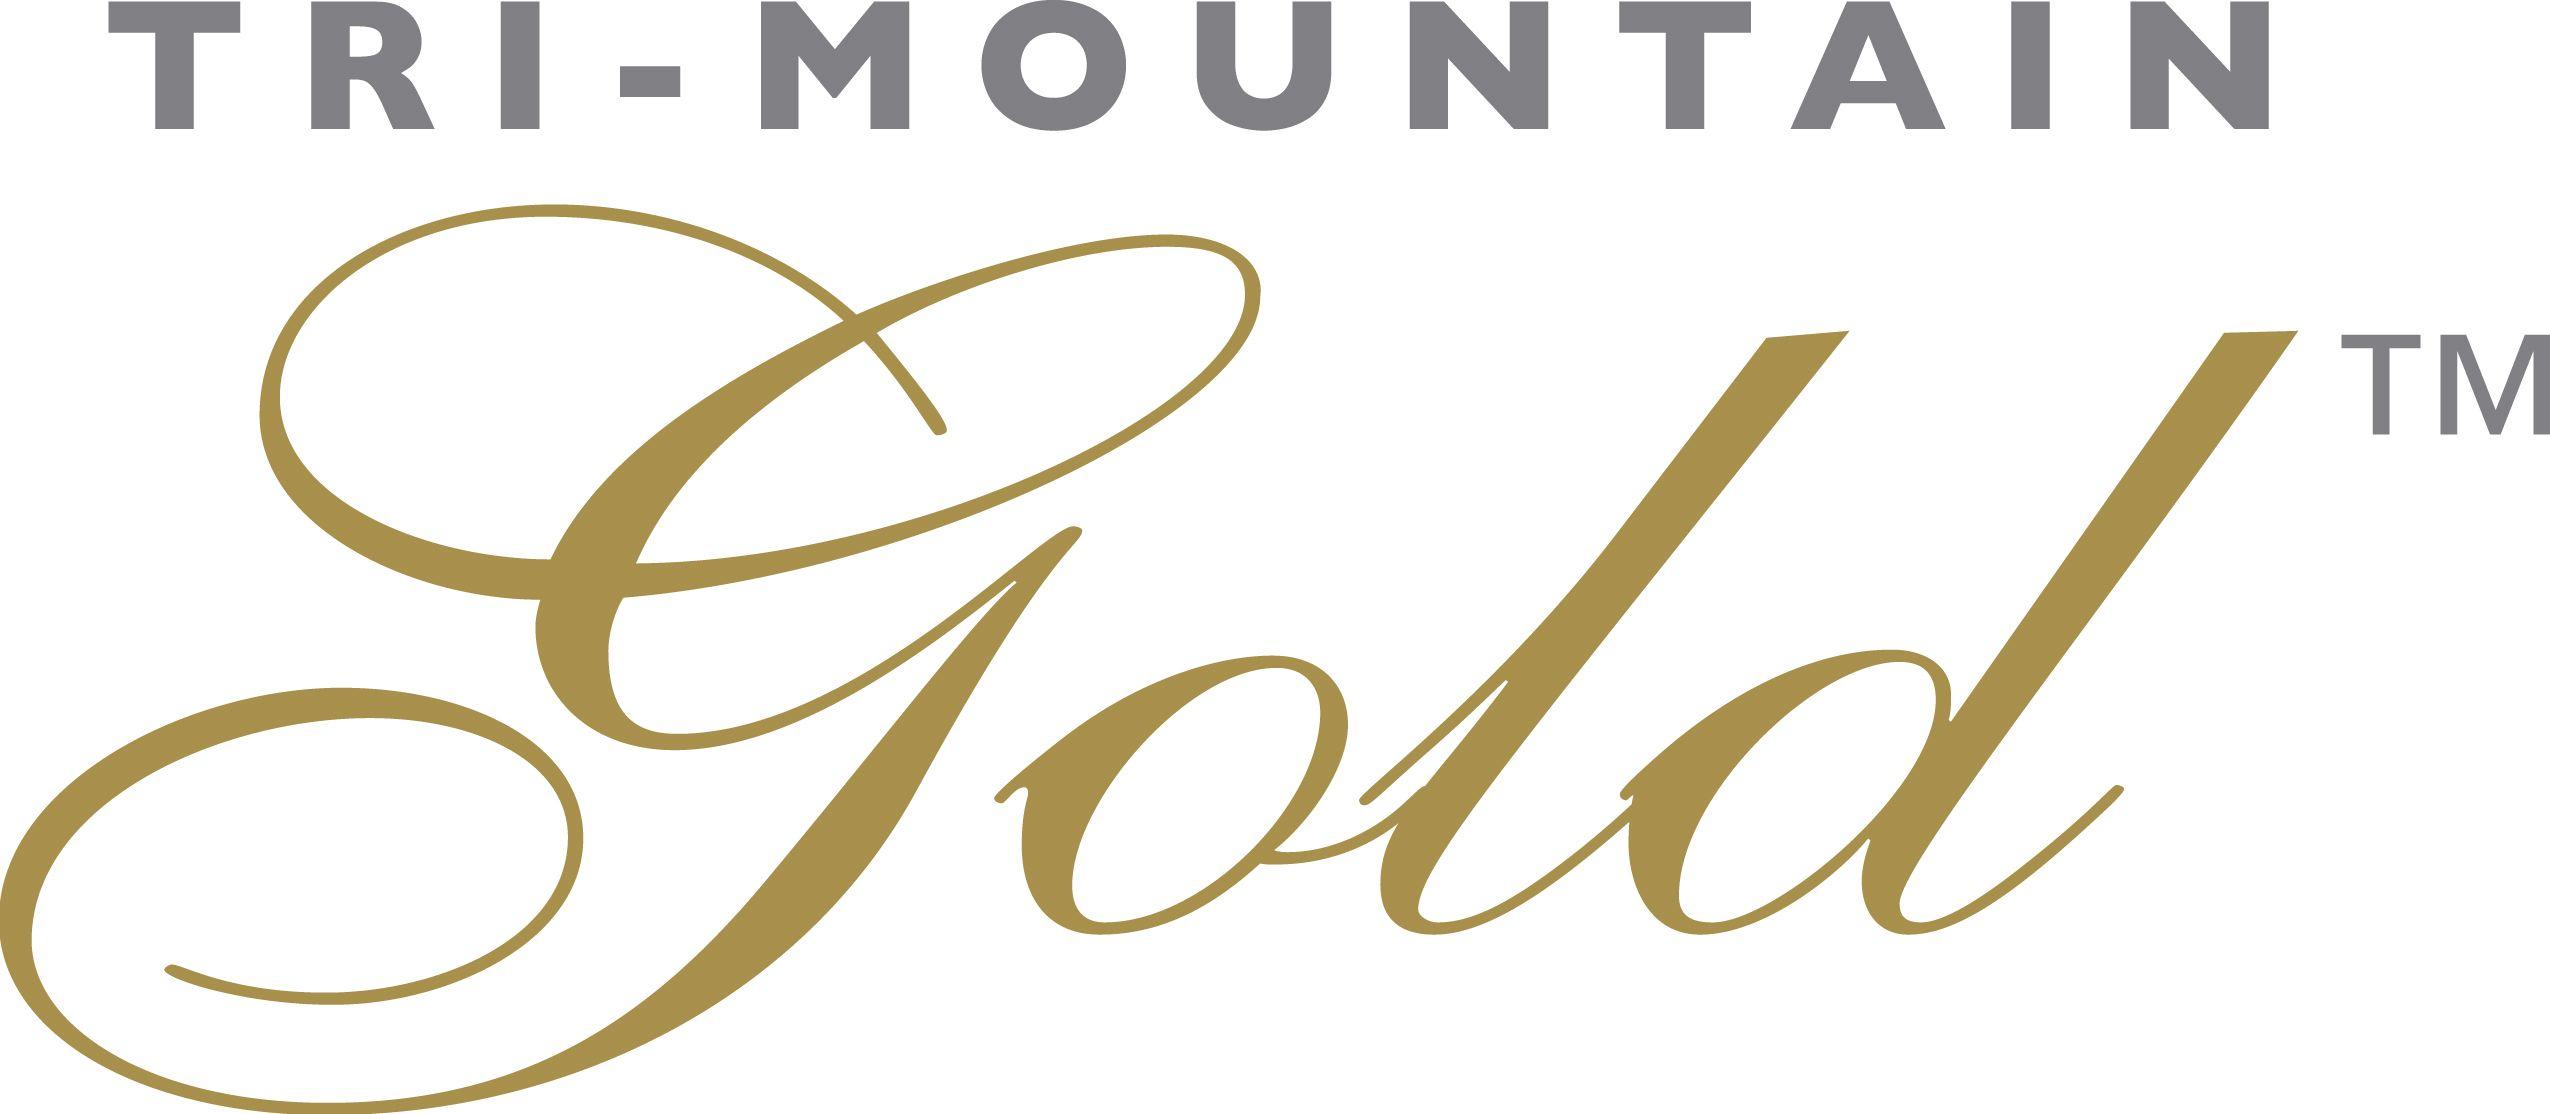 Gold Swirl Logo - Picture of Gold Swirl Logo